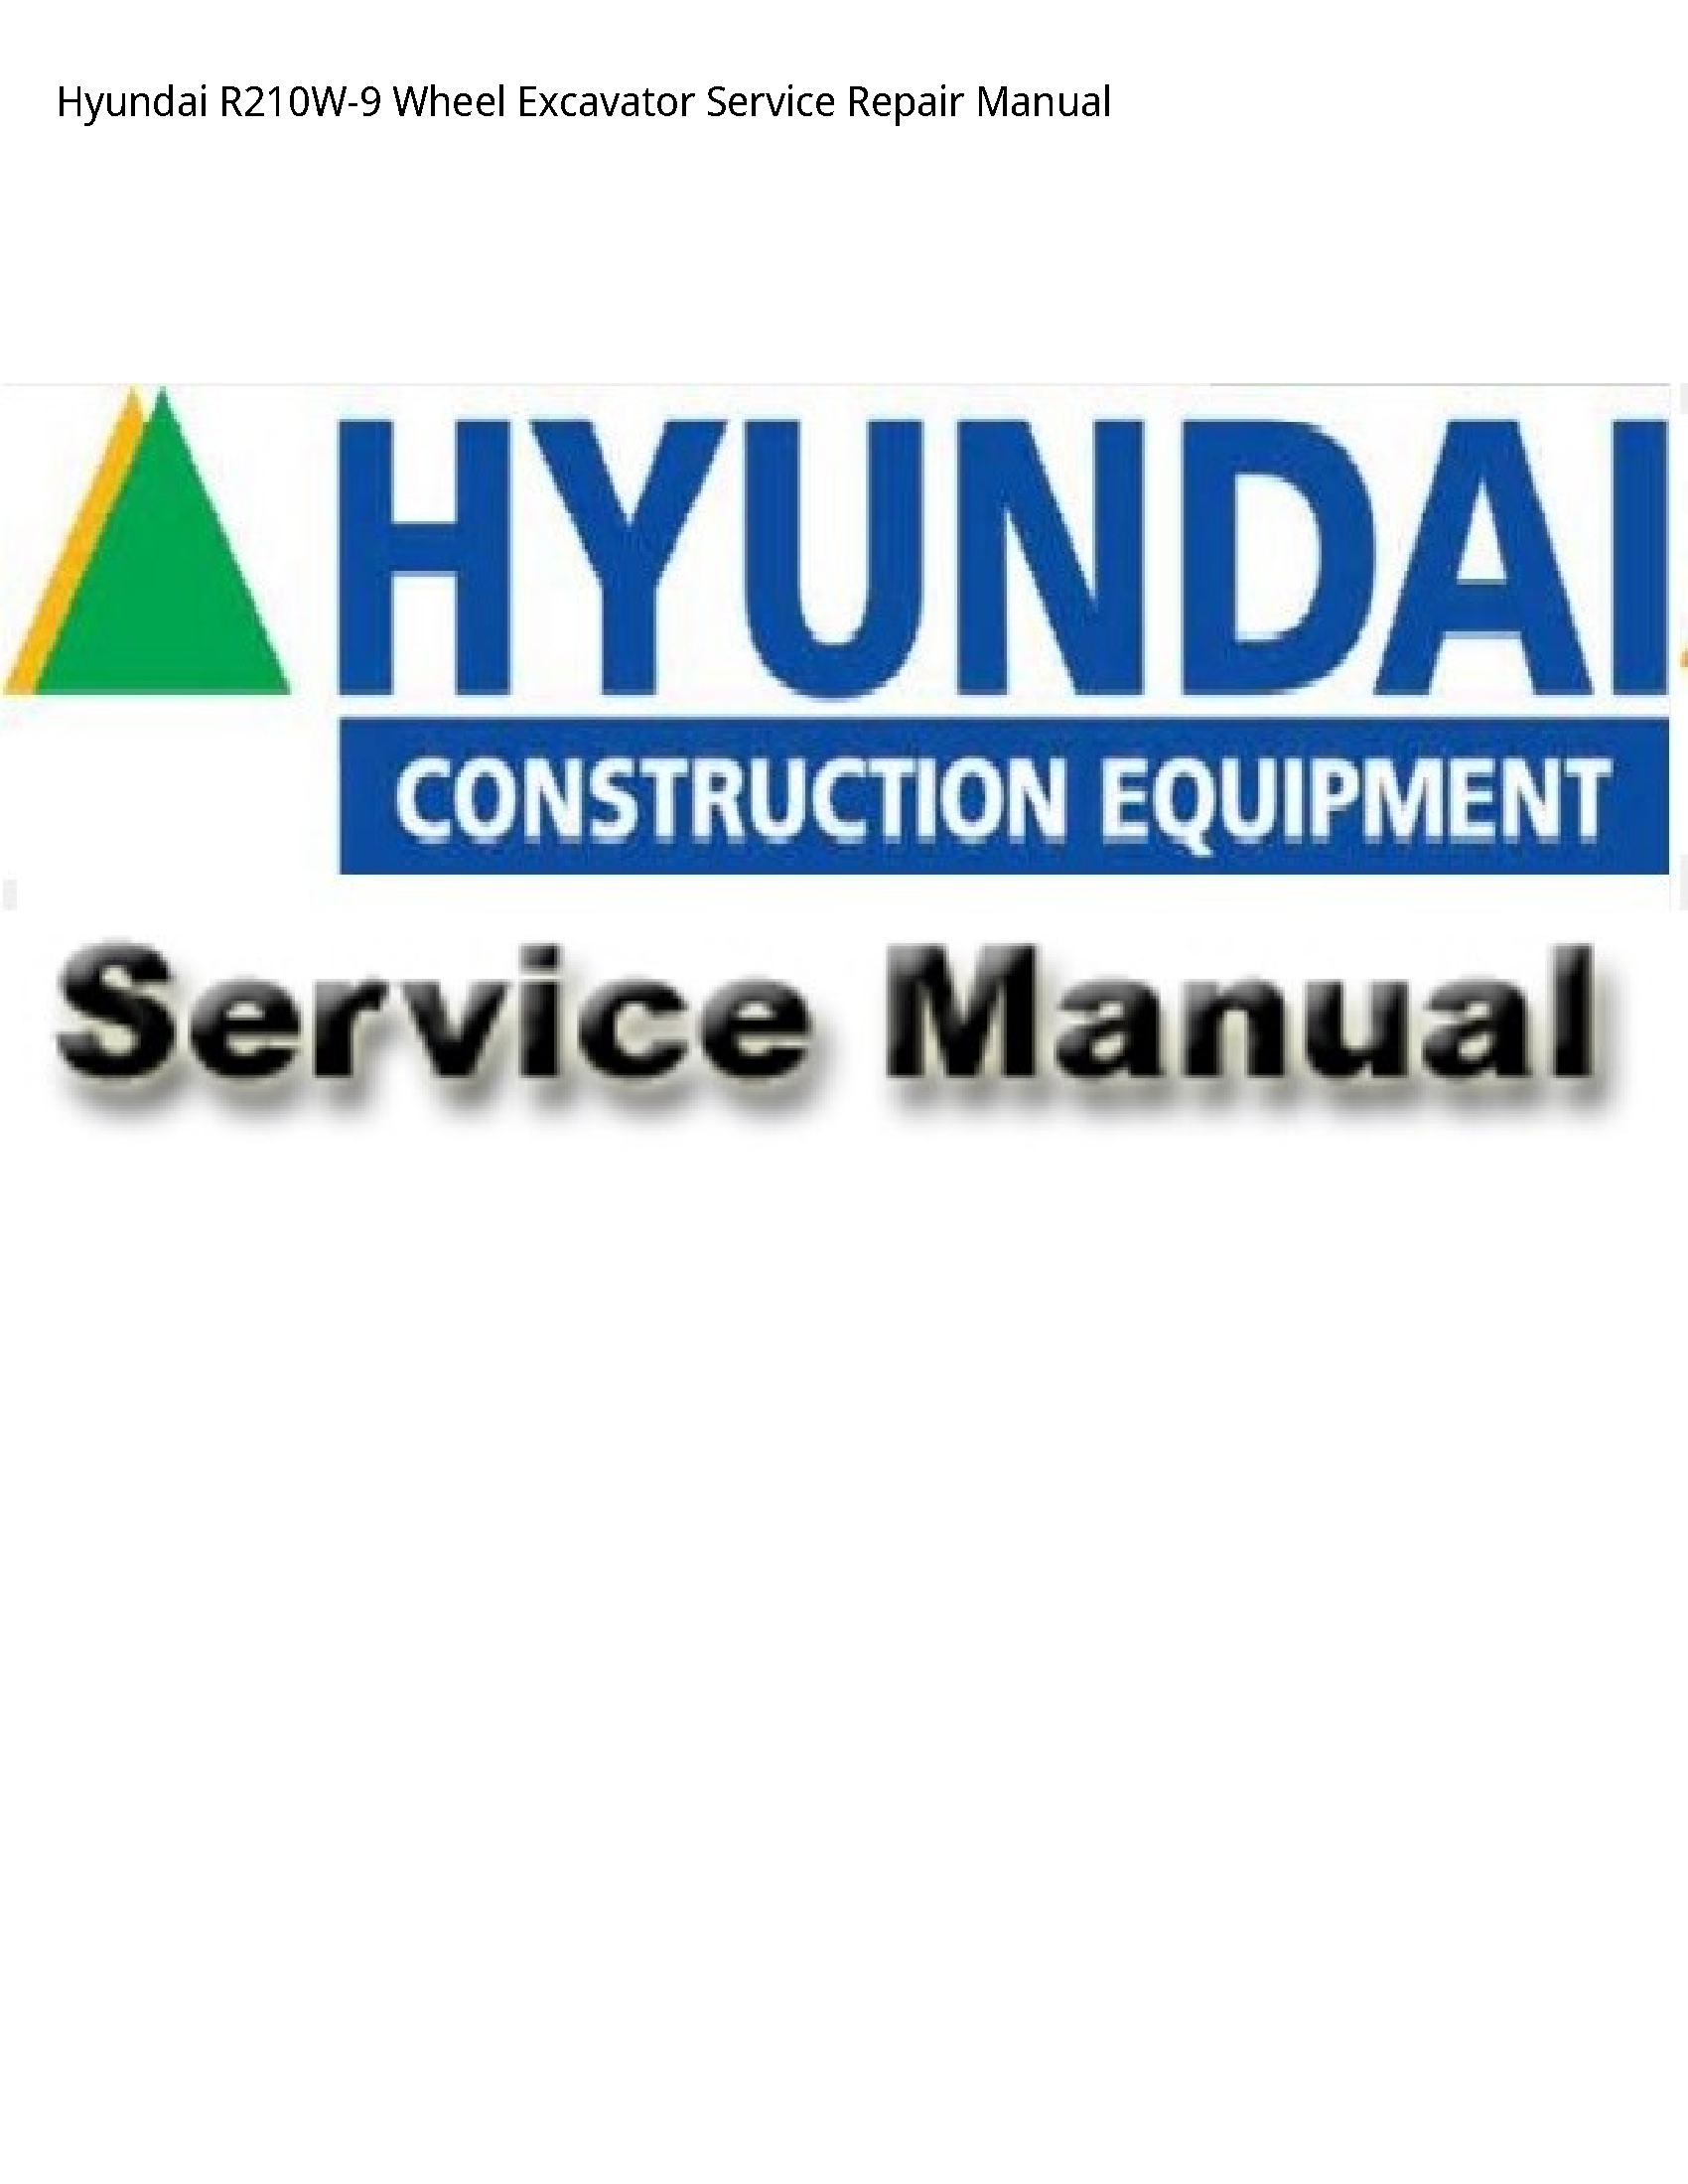 Hyundai R210W-9 Wheel Excavator manual